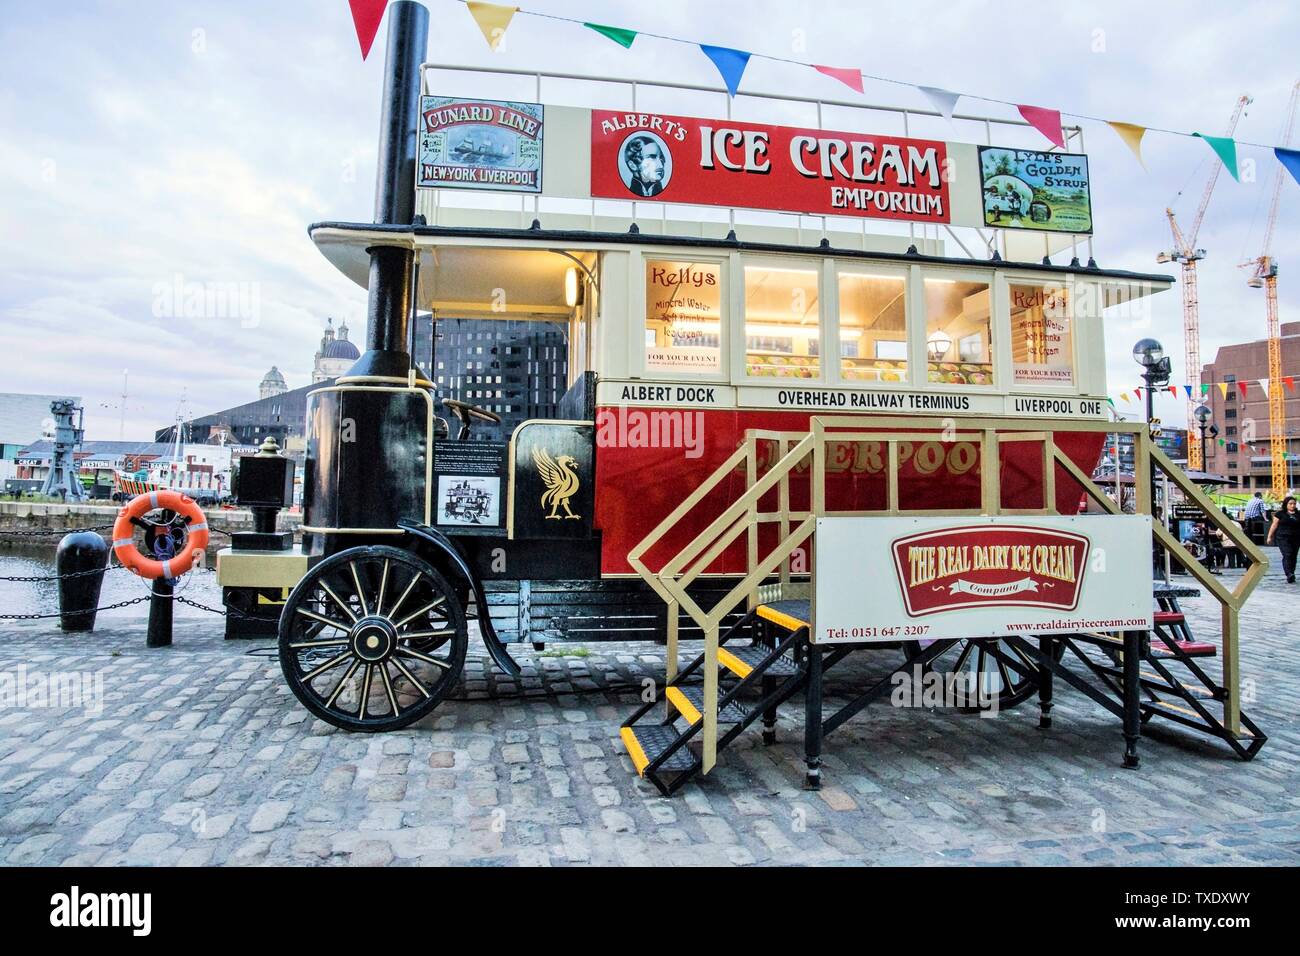 Ice cream bus Emporium, el Albert Dock, Liverpool, Inglaterra, UK, Reino Unido Foto de stock